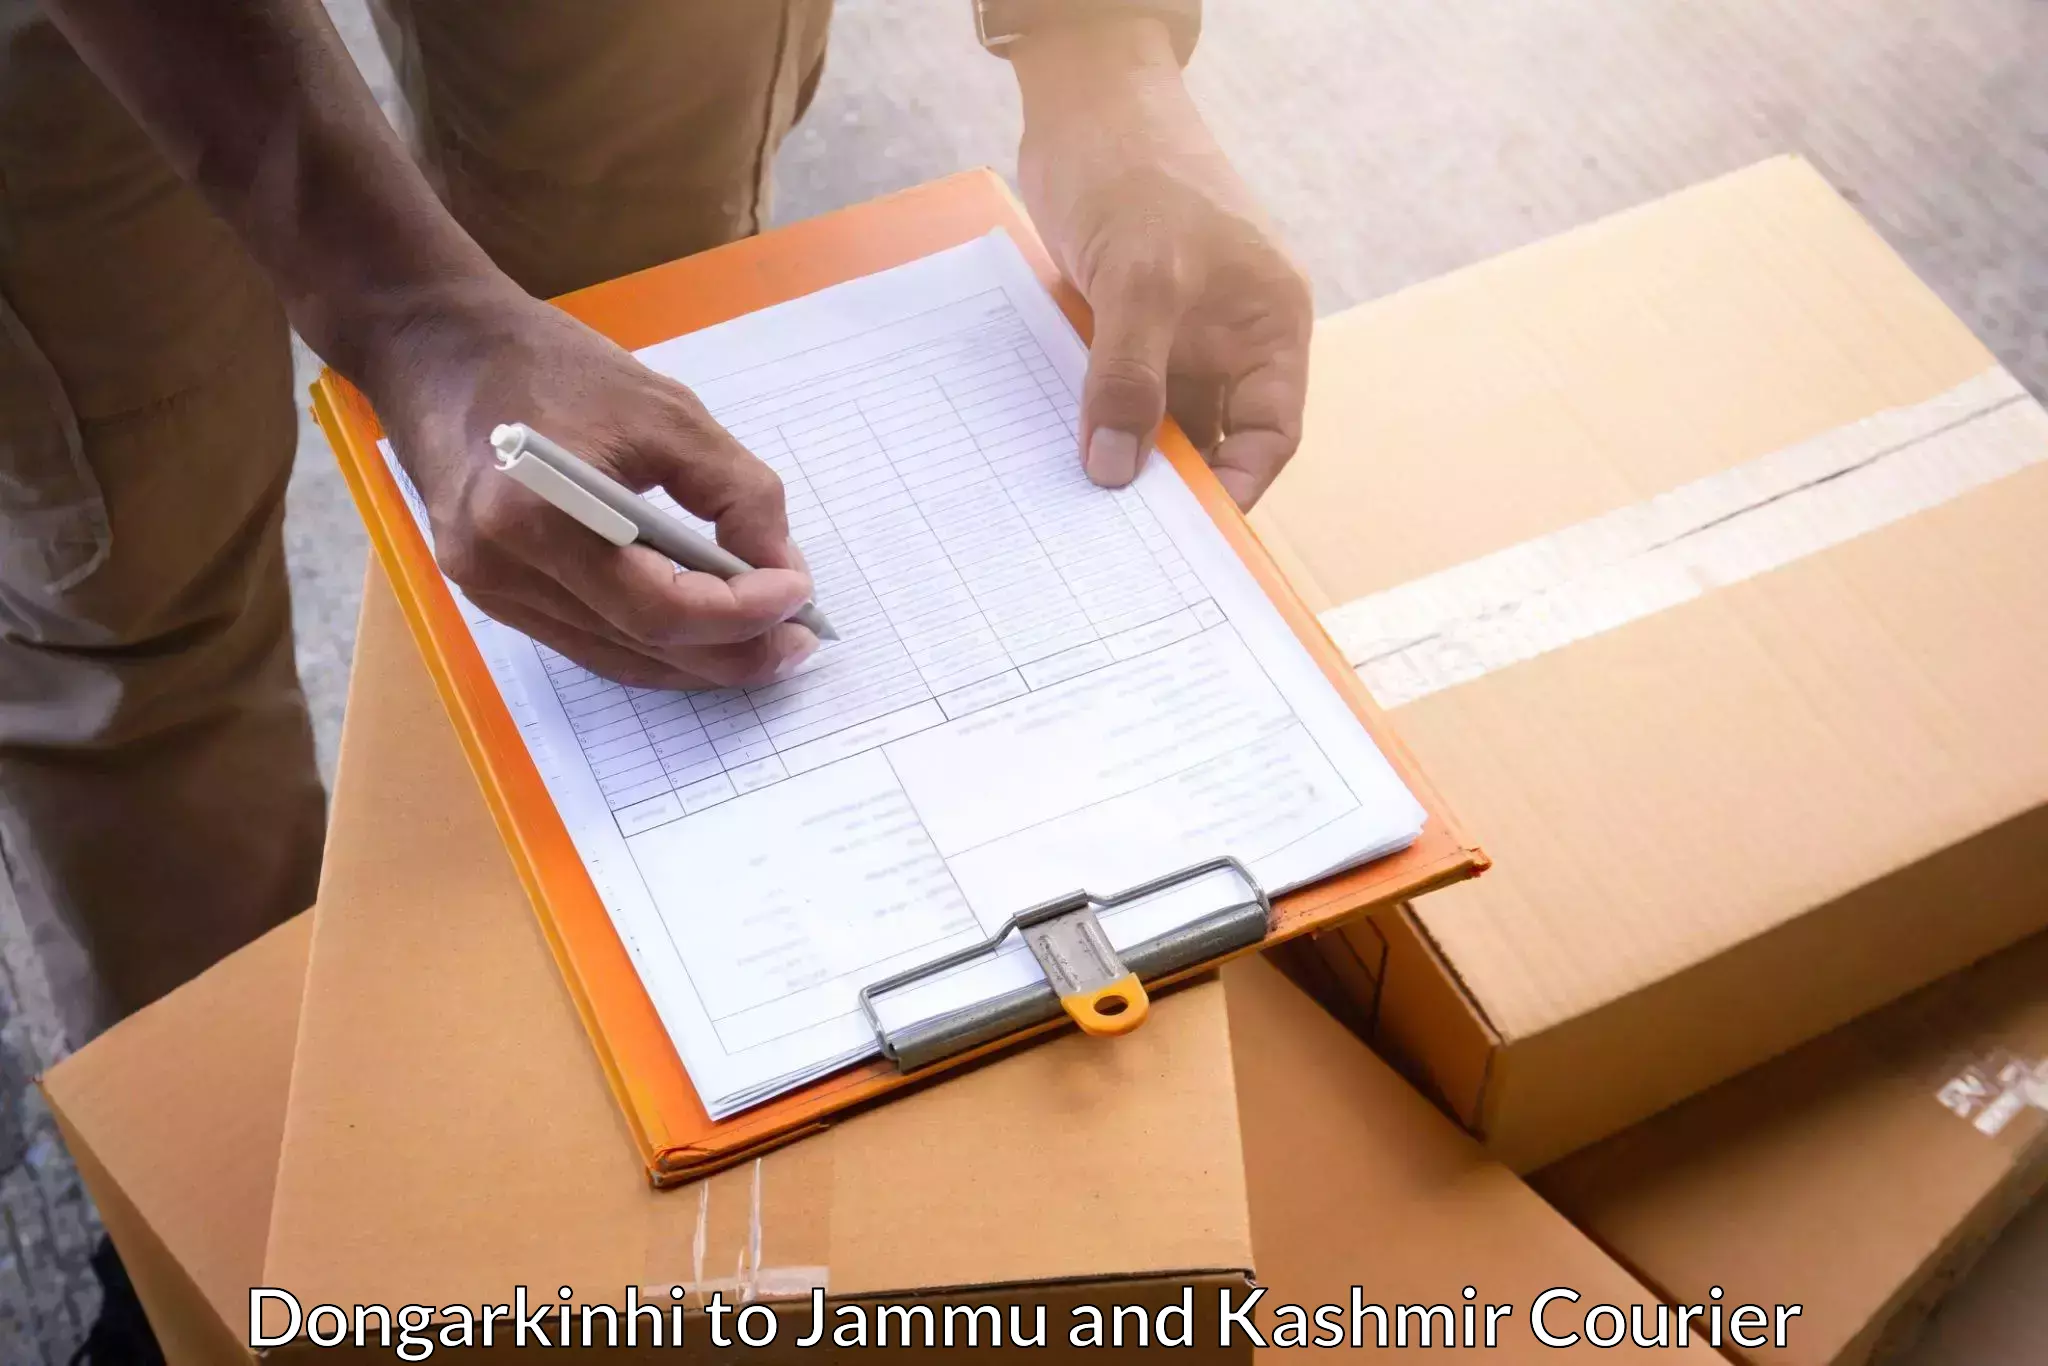 Weekend courier service Dongarkinhi to Jammu and Kashmir